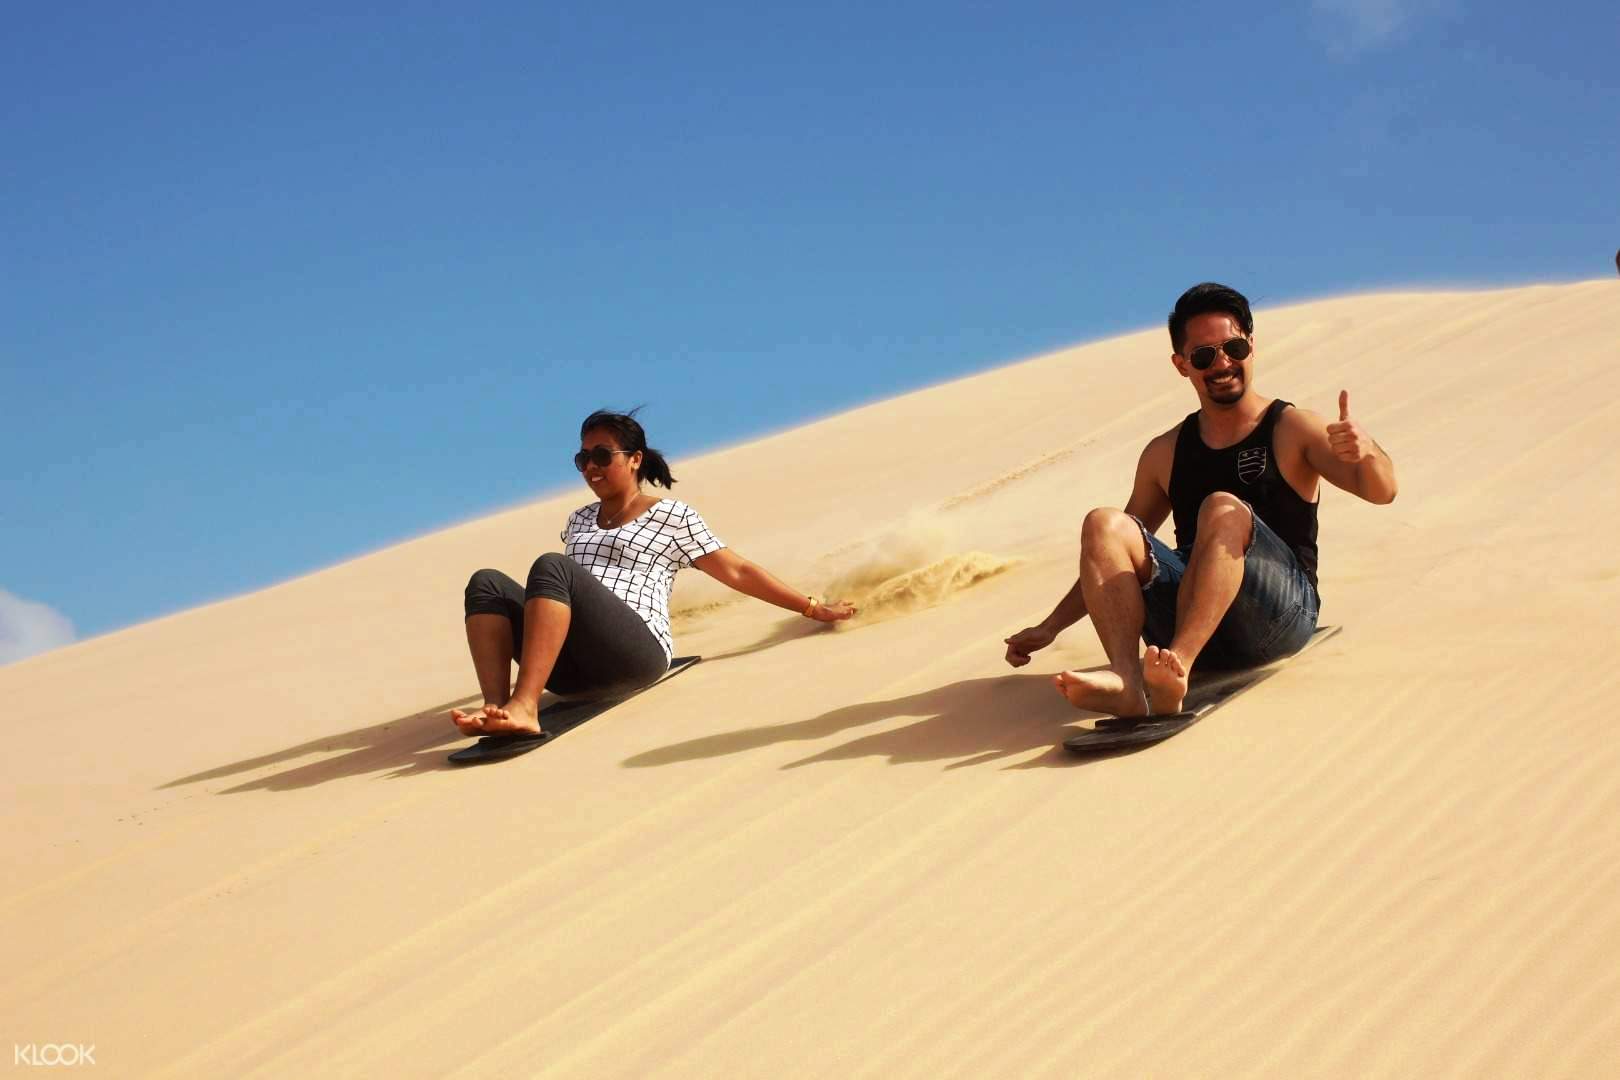 Morocco sand boarding tours in Zagora desert 